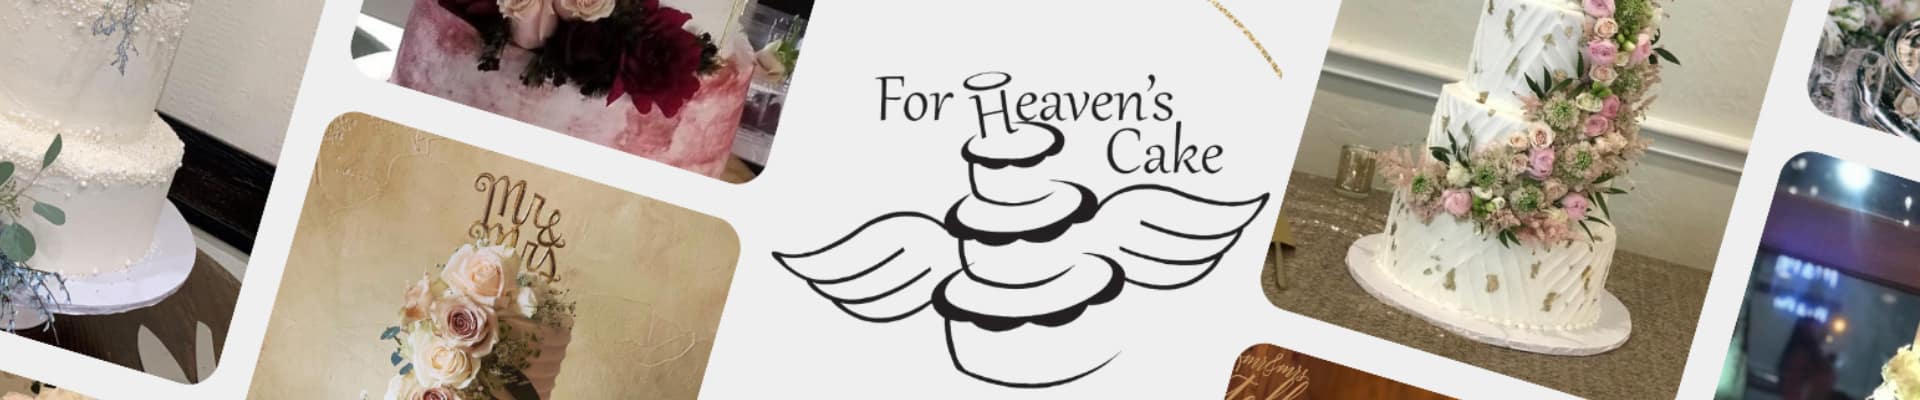 Dessert Buffet Listing Category For Heaven’s Cake